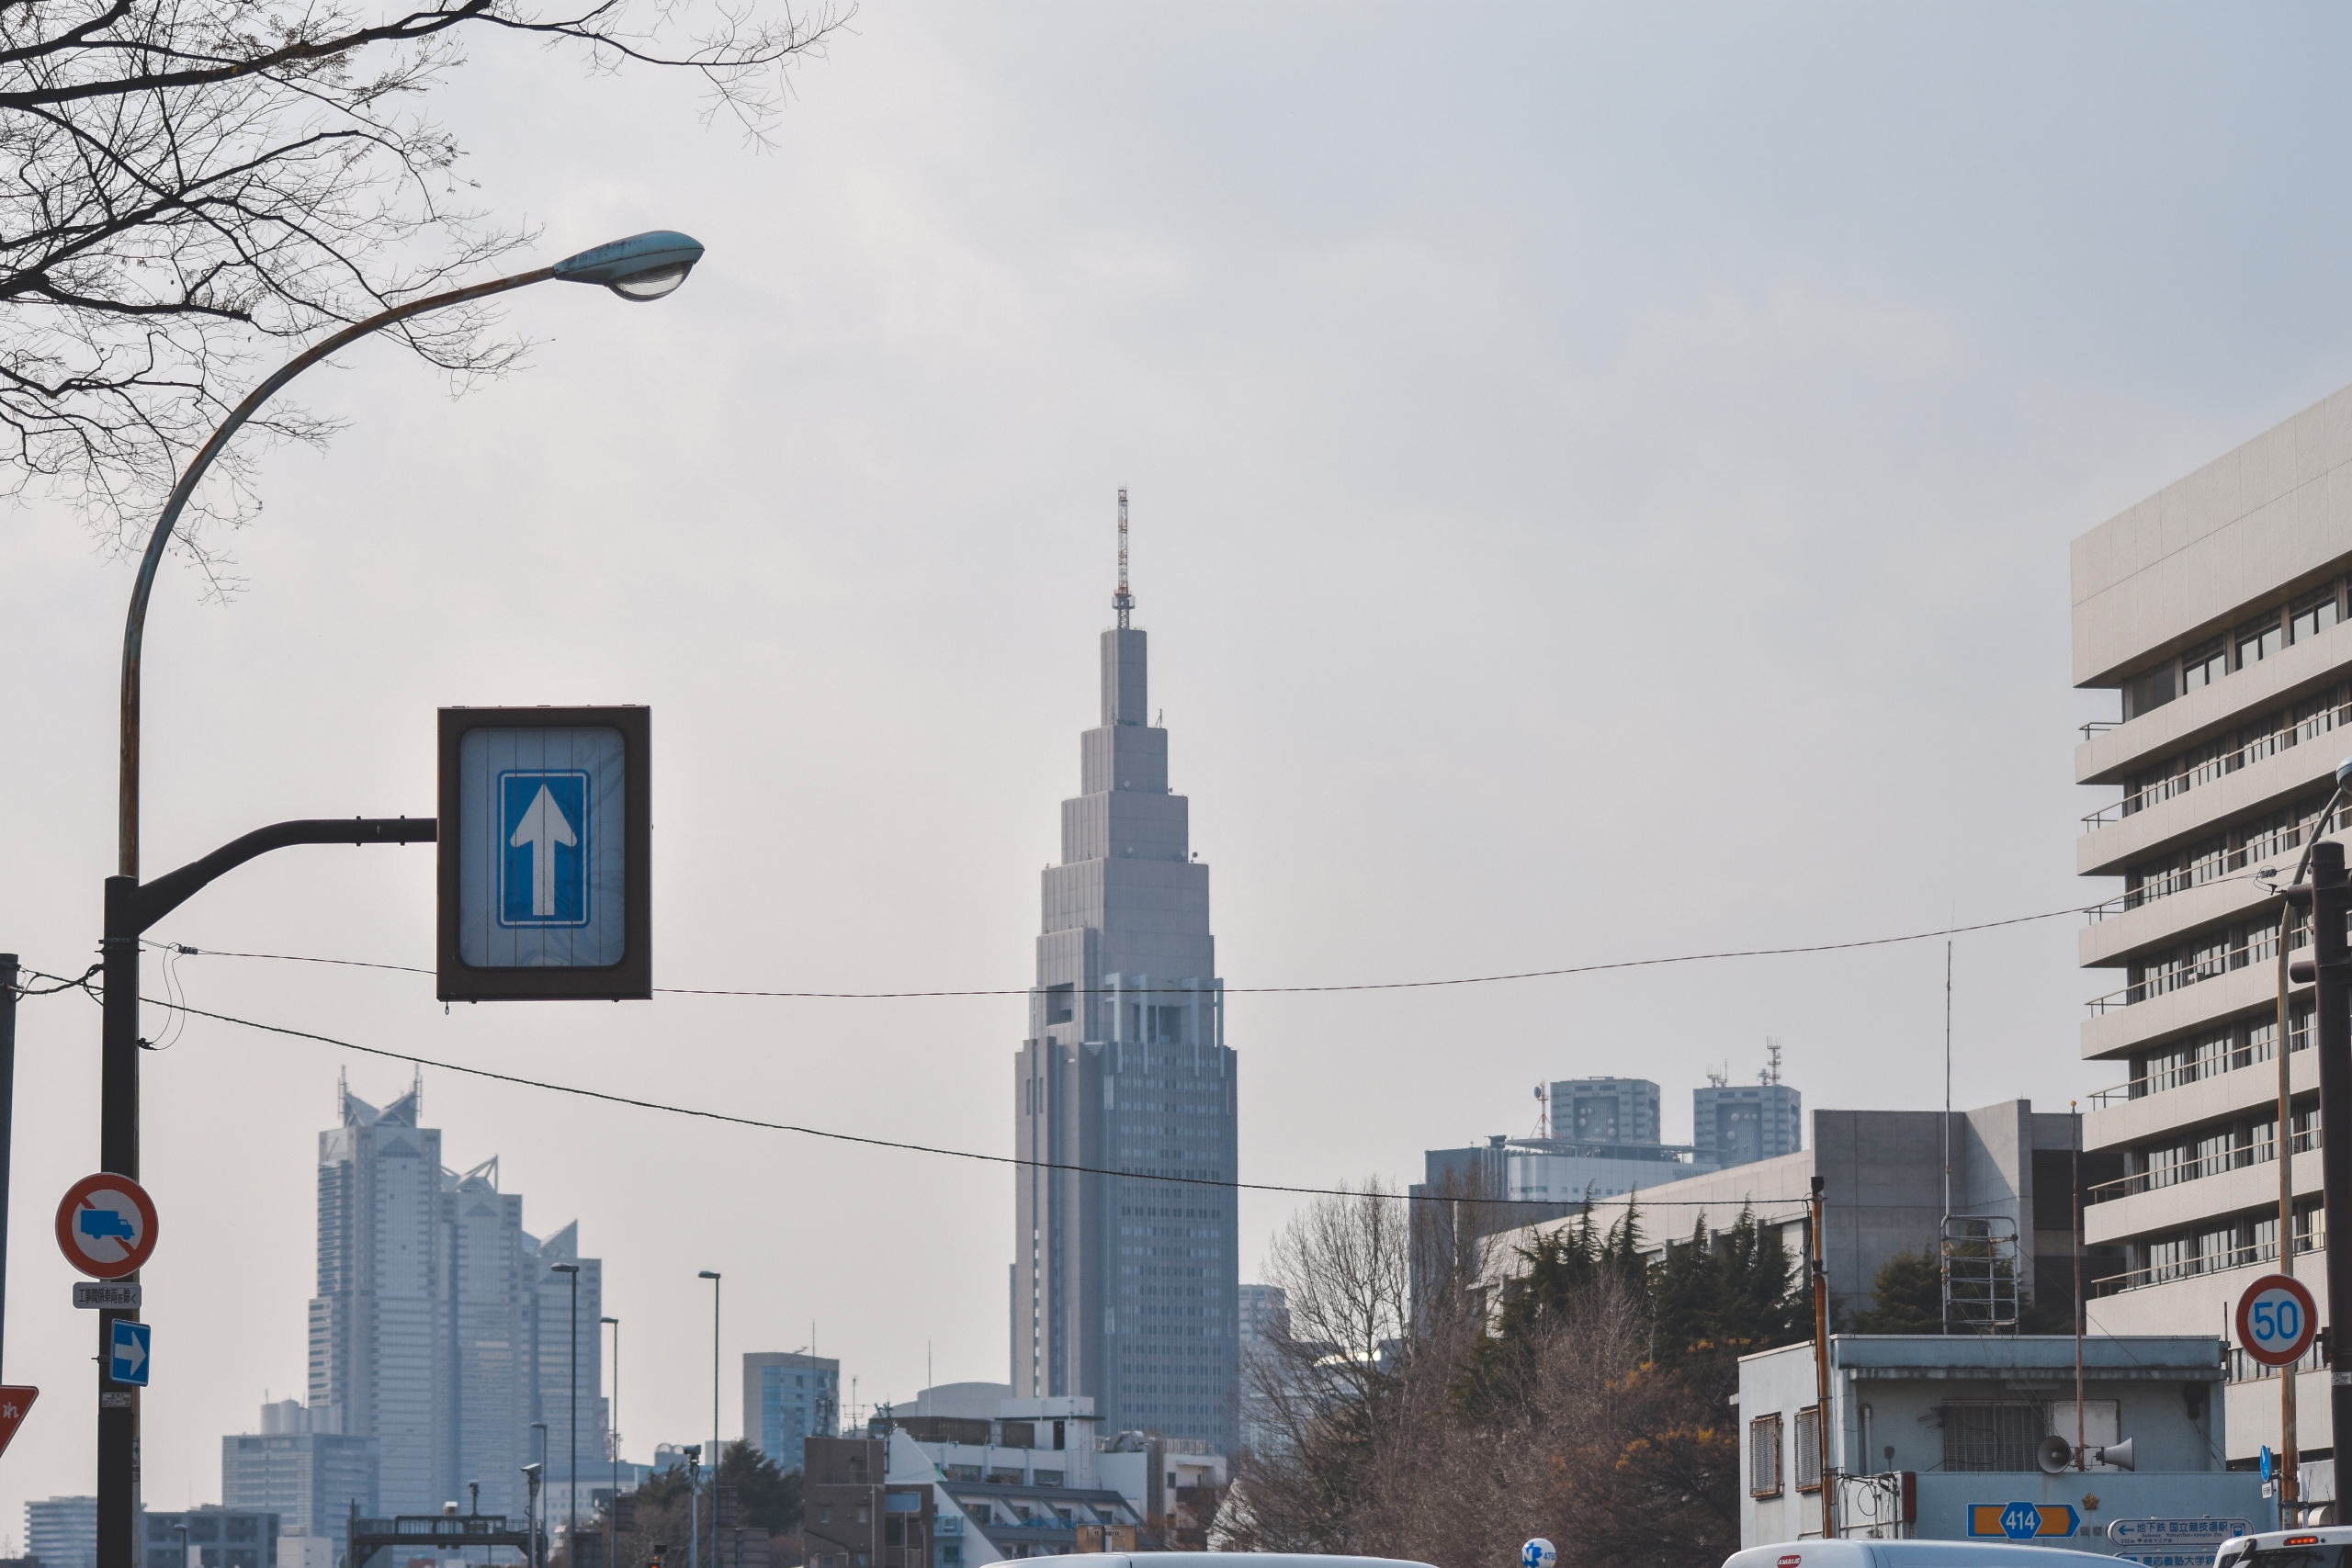 General 2560x1707 Japan Tokyo cityscape Asia urban street architecture Kimi no Na Wa road sign